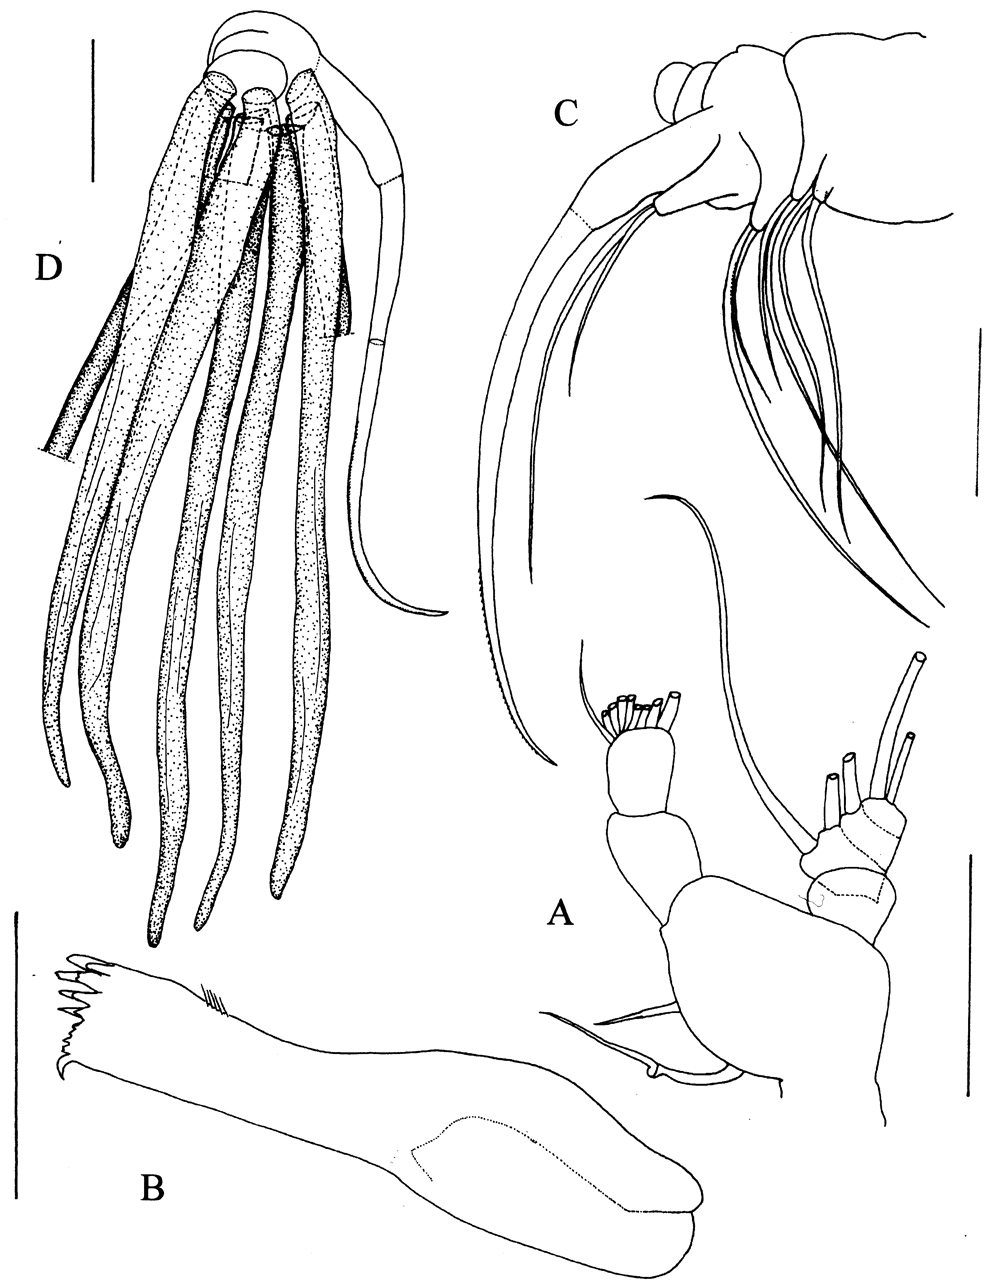 Species Kyphocalanus sp.2 - Plate 2 of morphological figures